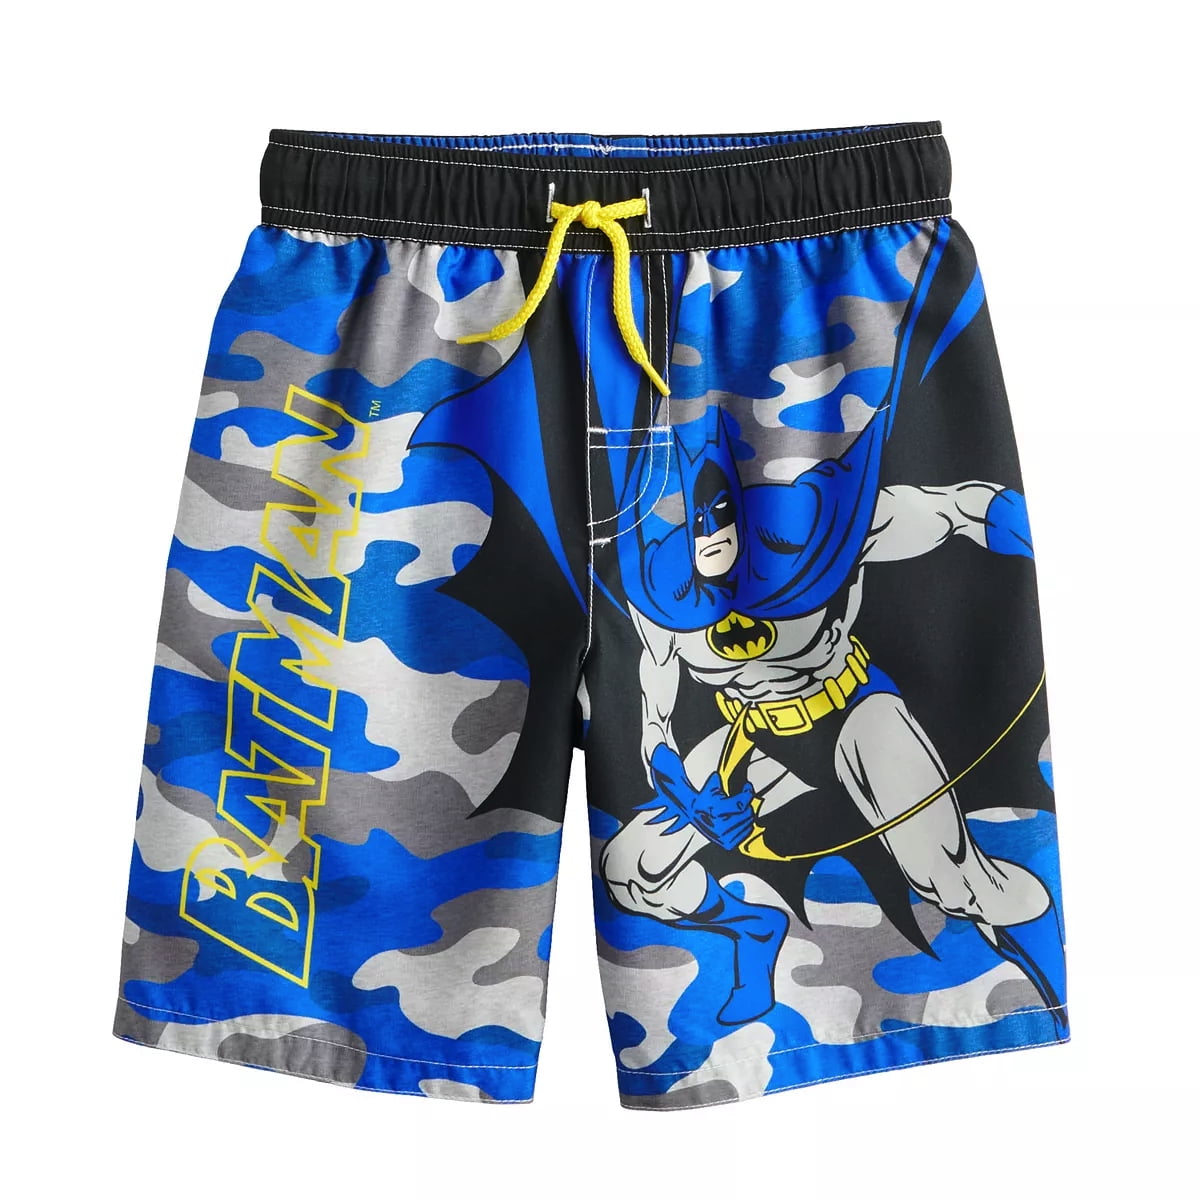 NWT Old Navy DC Comics Superhero Batman,Board Shorts Swim Trunks Boys 18-24 mo